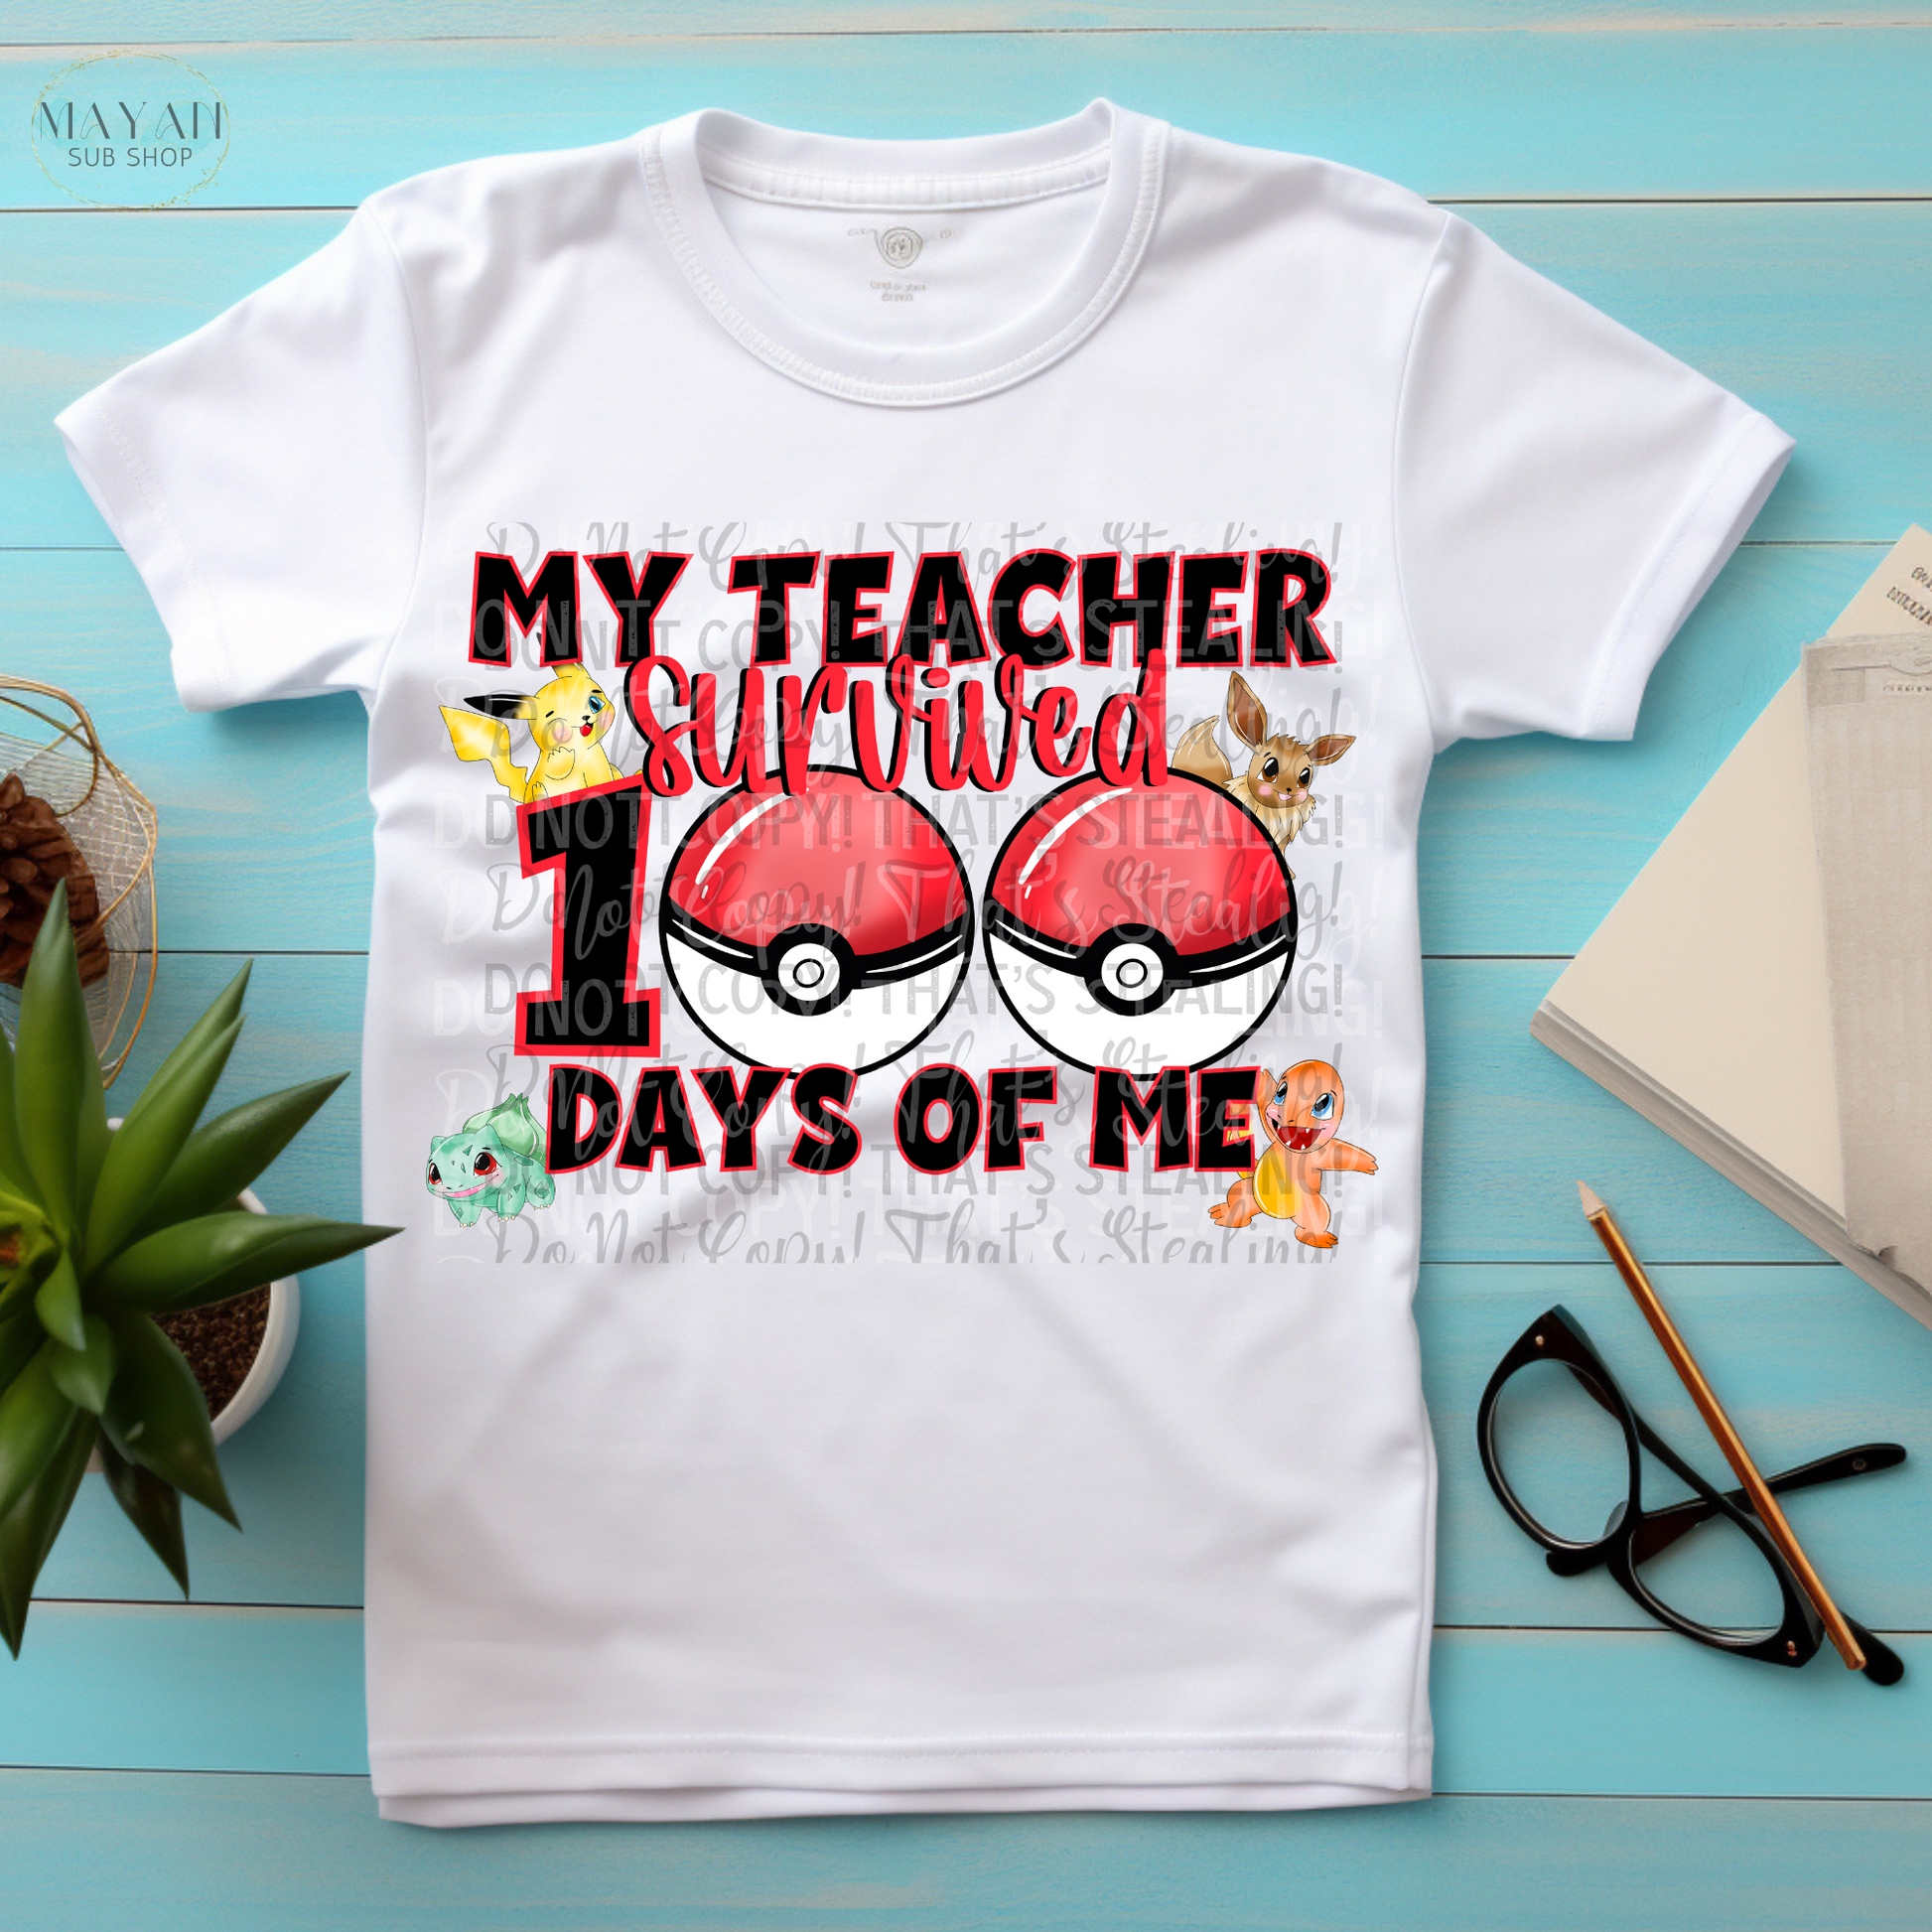 My teacher survived 100 days of me kids shirt. -Mayan Sub Shop